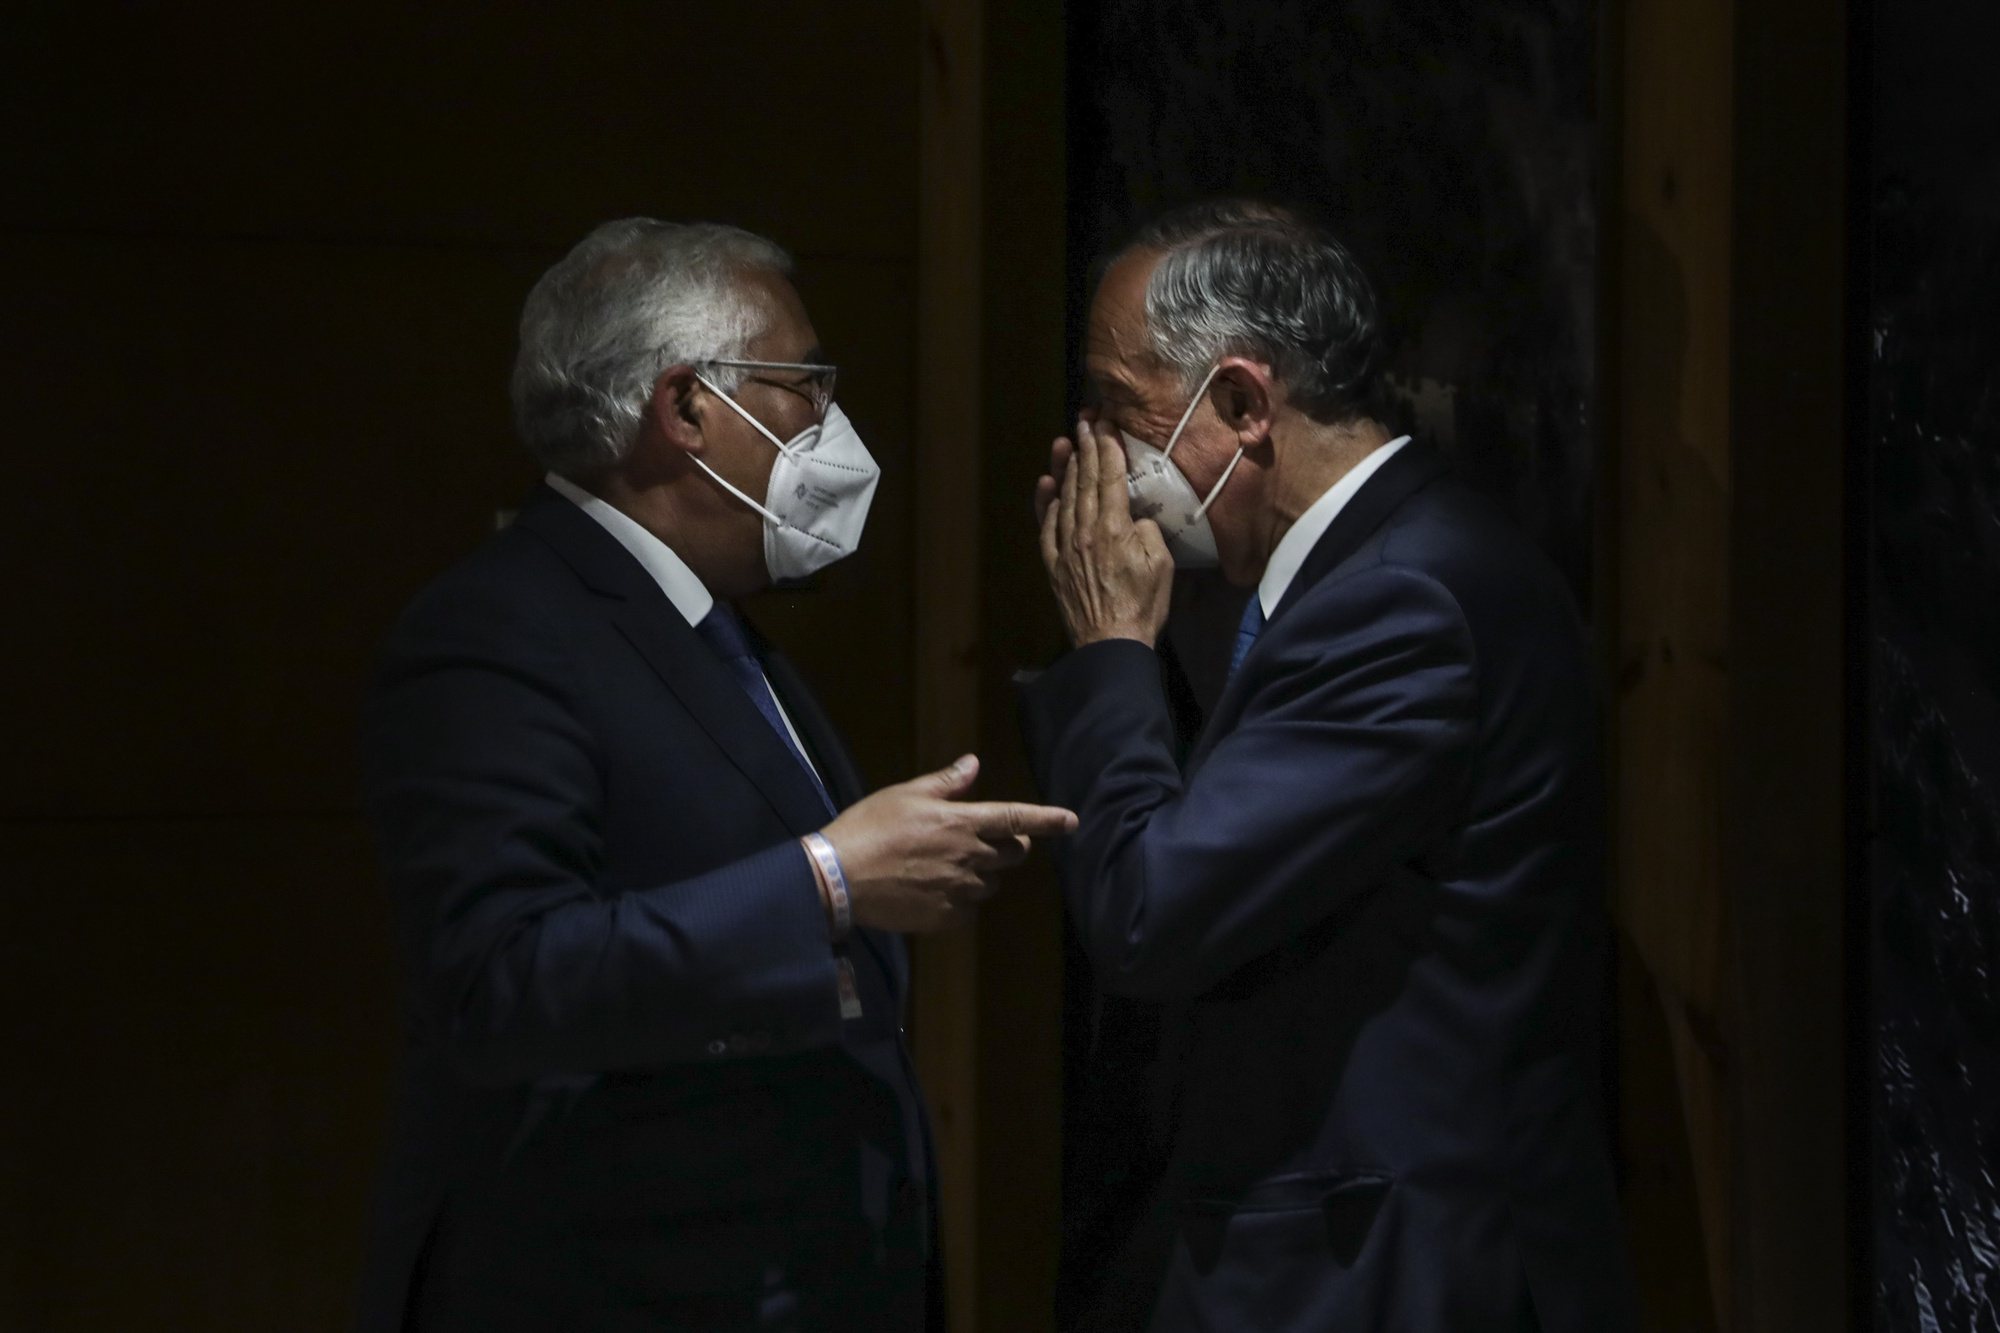 O Presidente da República, Marcelo Rebelo de Sousa (D), conversa co o primeiro-ministro, António Costa, durante a XXVII Cimeira Ibero-Americana, em Andorra, 21 de abril de 2021. TIAGO PETINGA/LUSA